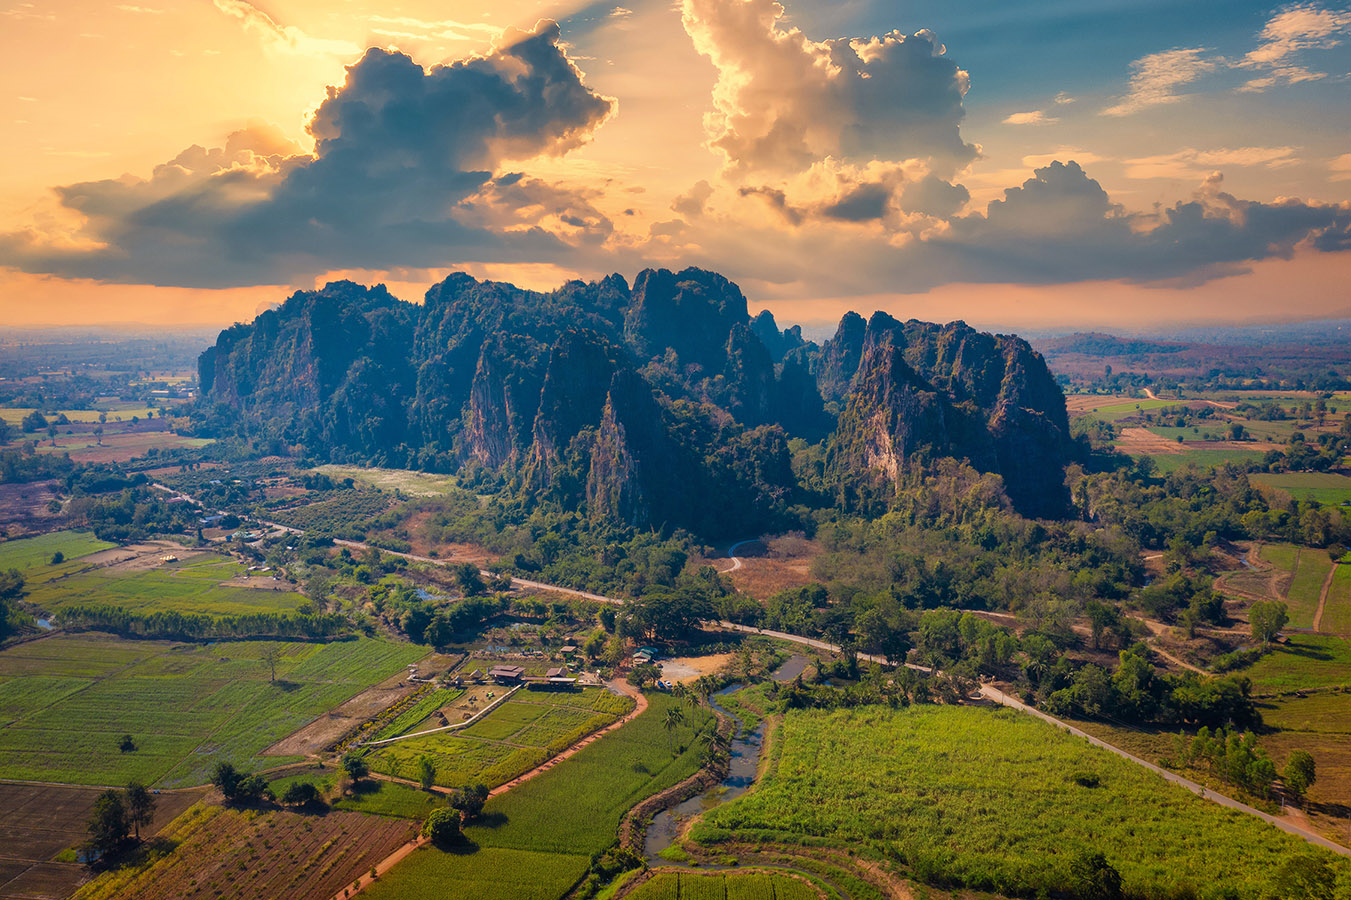 Airbnb เปิดตัว Airbnb Travel Guide 2022: Thailand เป็นครั้งแรก หลังการท่องเที่ยวภายในประเทศกำลังฟื้นตัวและประเทศไทยเองก็กลับมาใช้มาตรการ Test & Go เพื่อเปิดรับนักเดินทางจากทั่วโลกอีกครั้ง ภาพจาก/Sanook